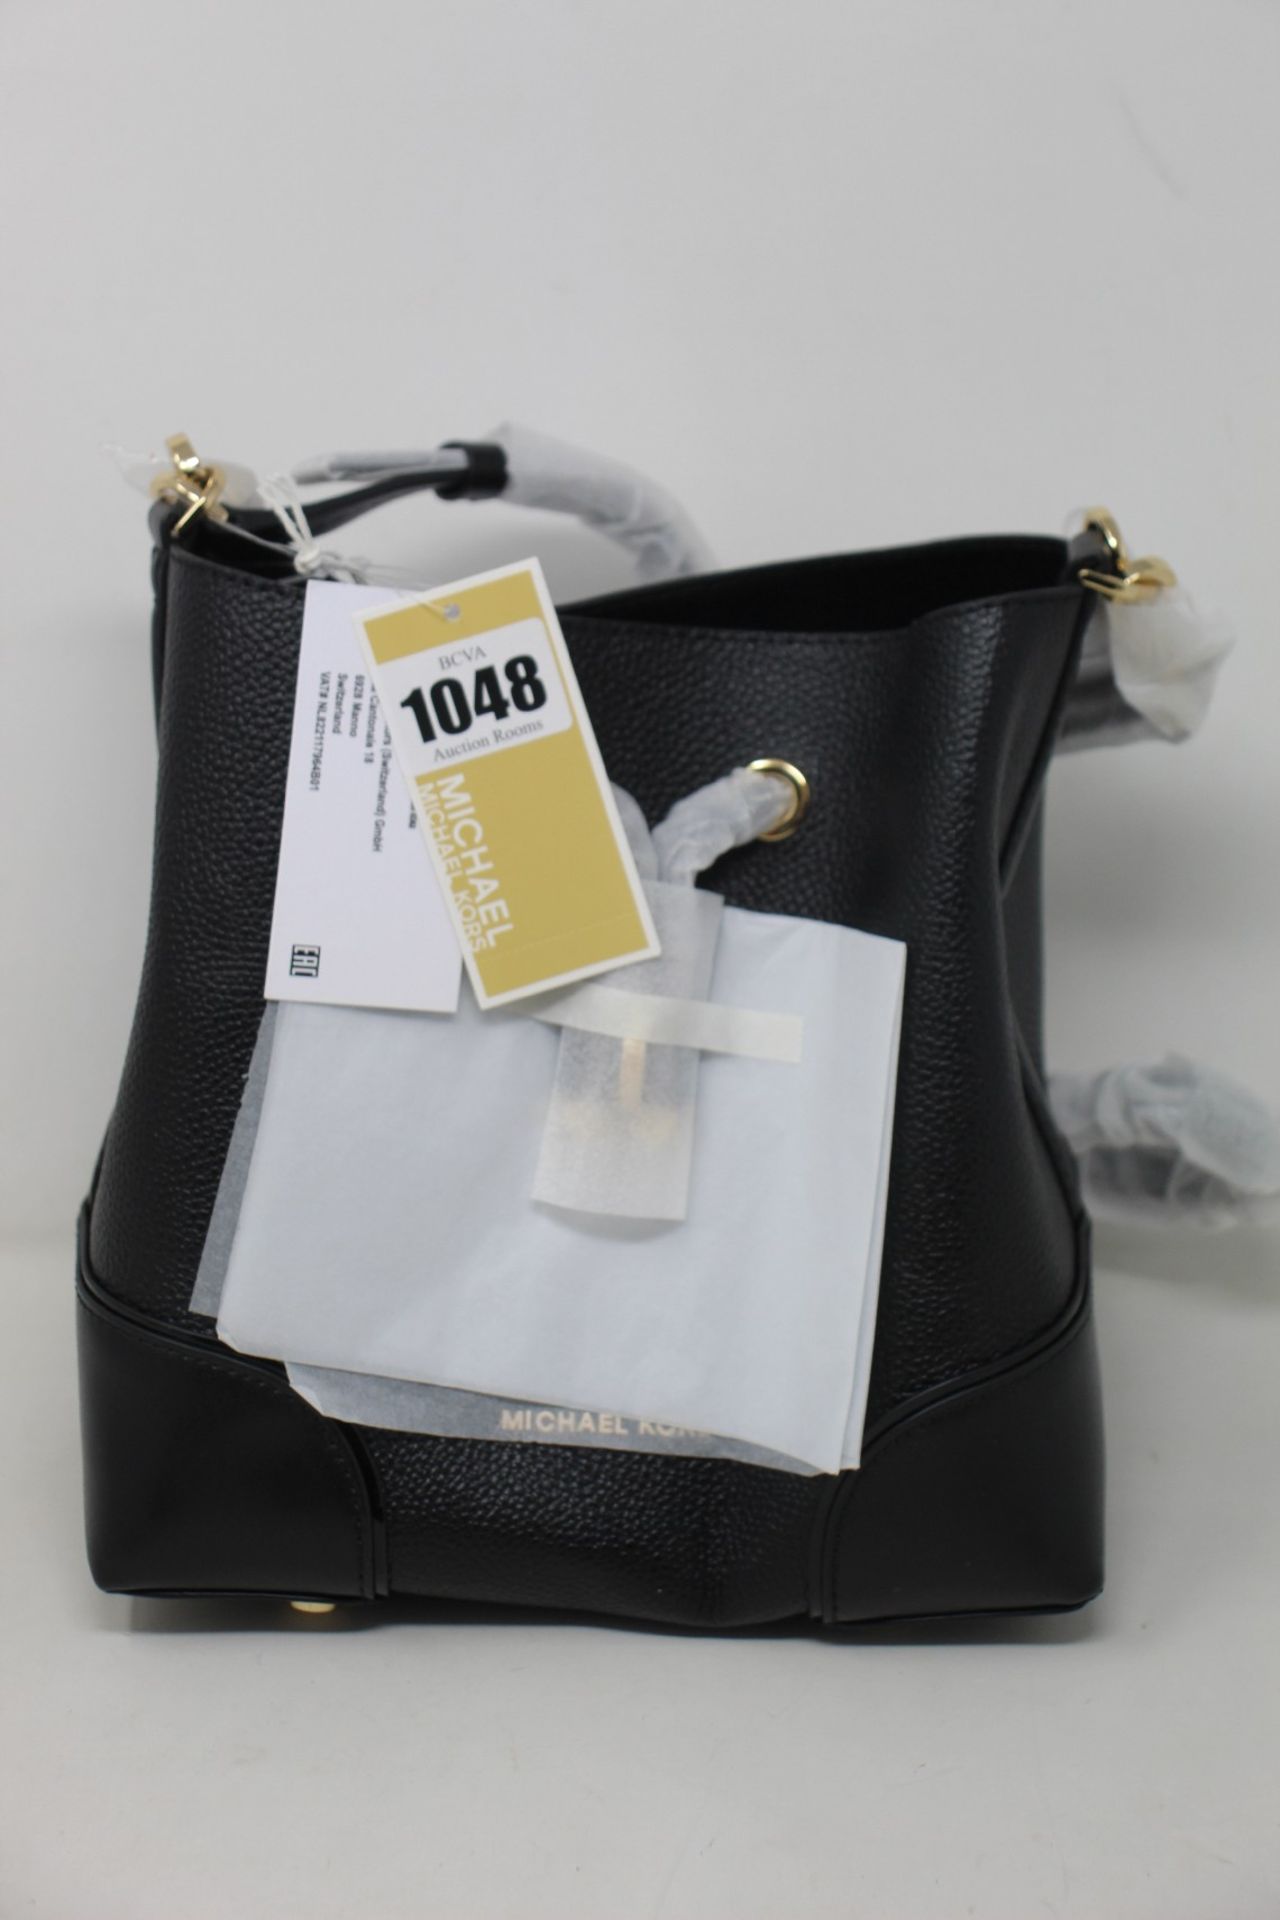 An as new Michael Kors small Mercer Gallery bag in black (RRP £290).